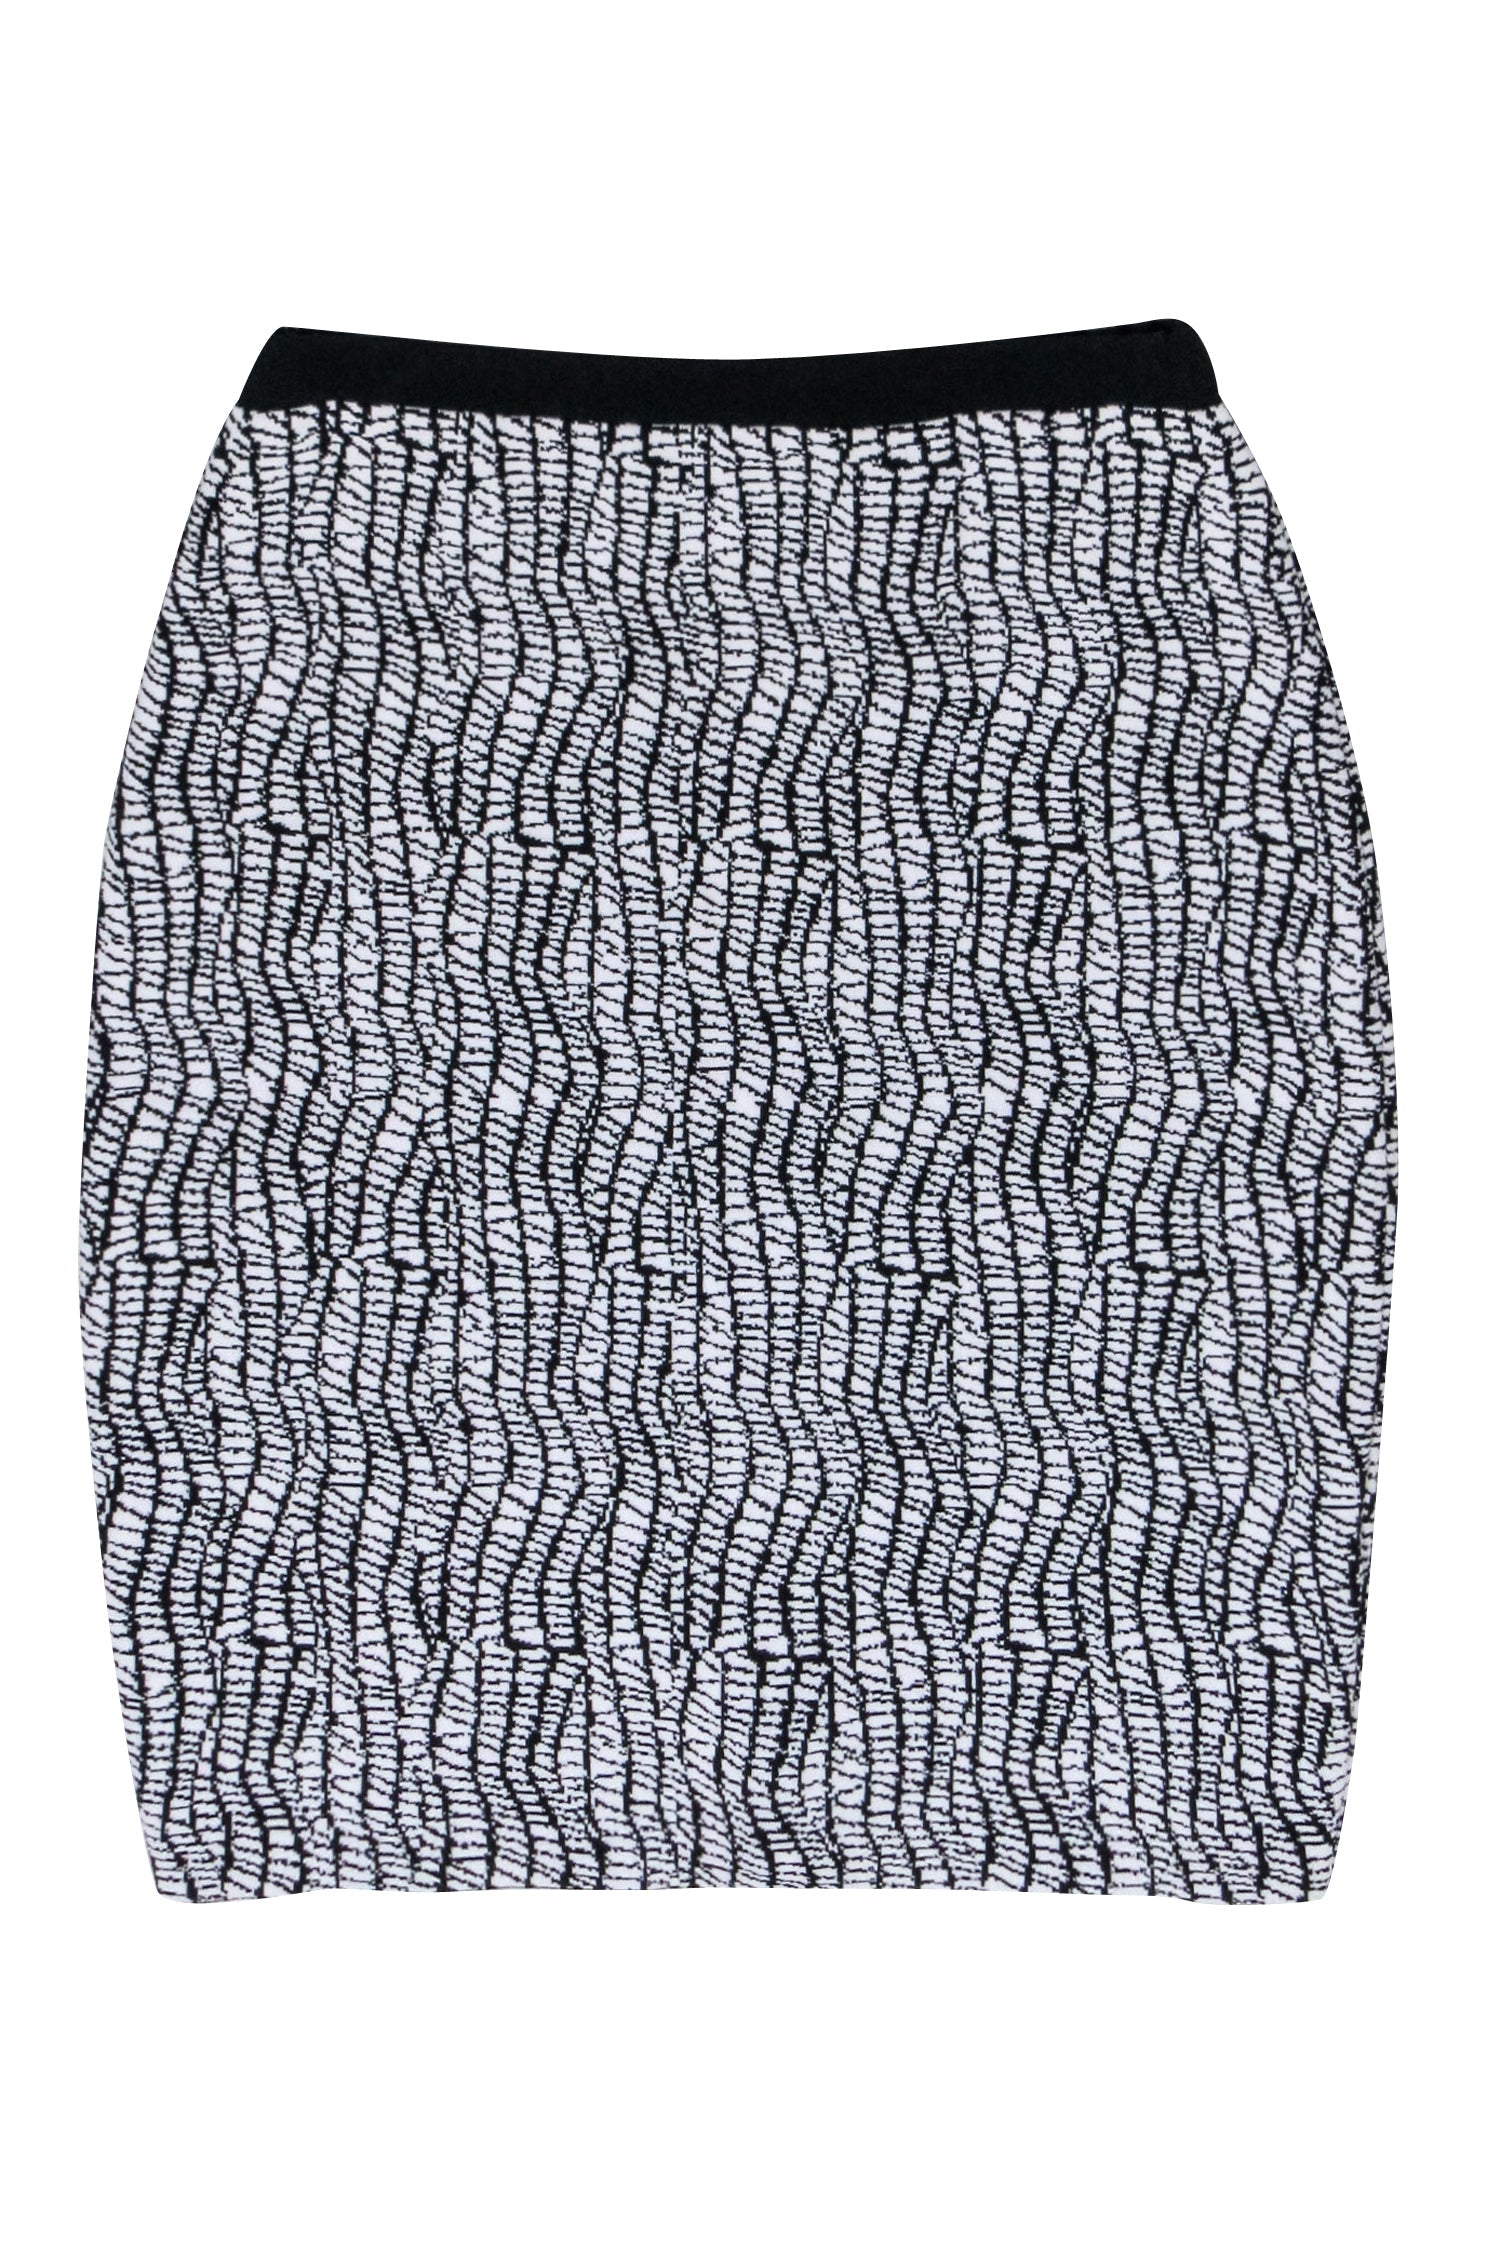 Reiss - White & Black Print Stretch Knit Skirt Sz 10